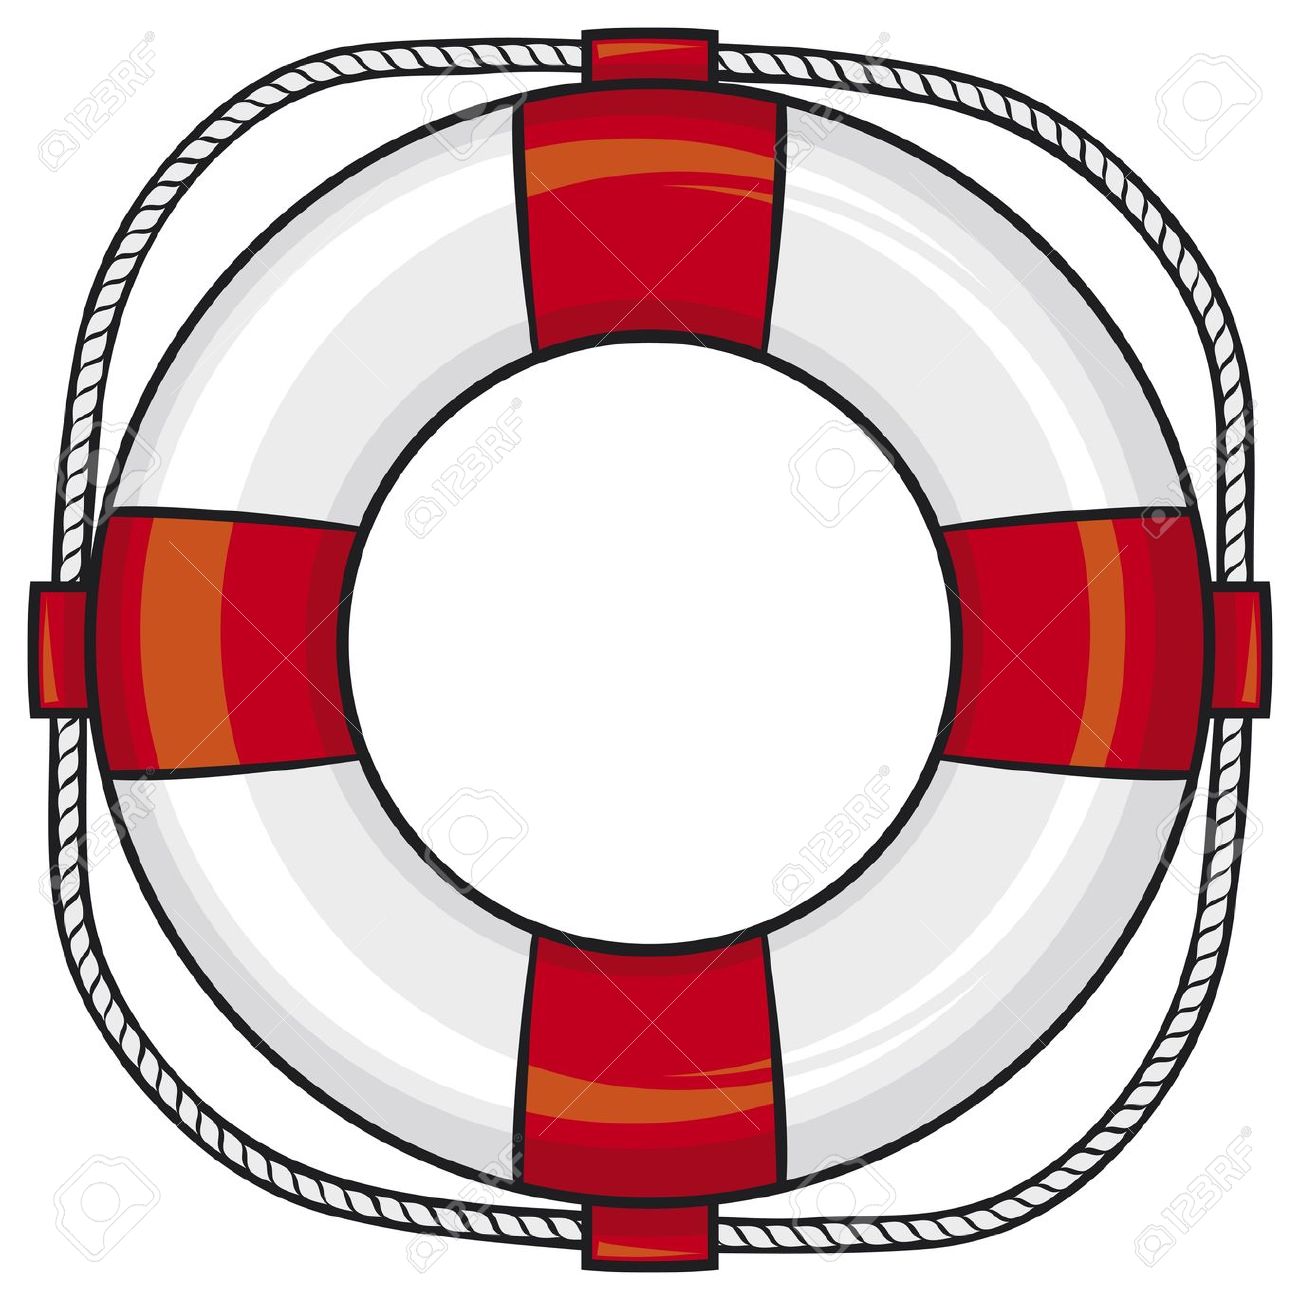 Lifeguard clipart lifesaving. Symbol free download best